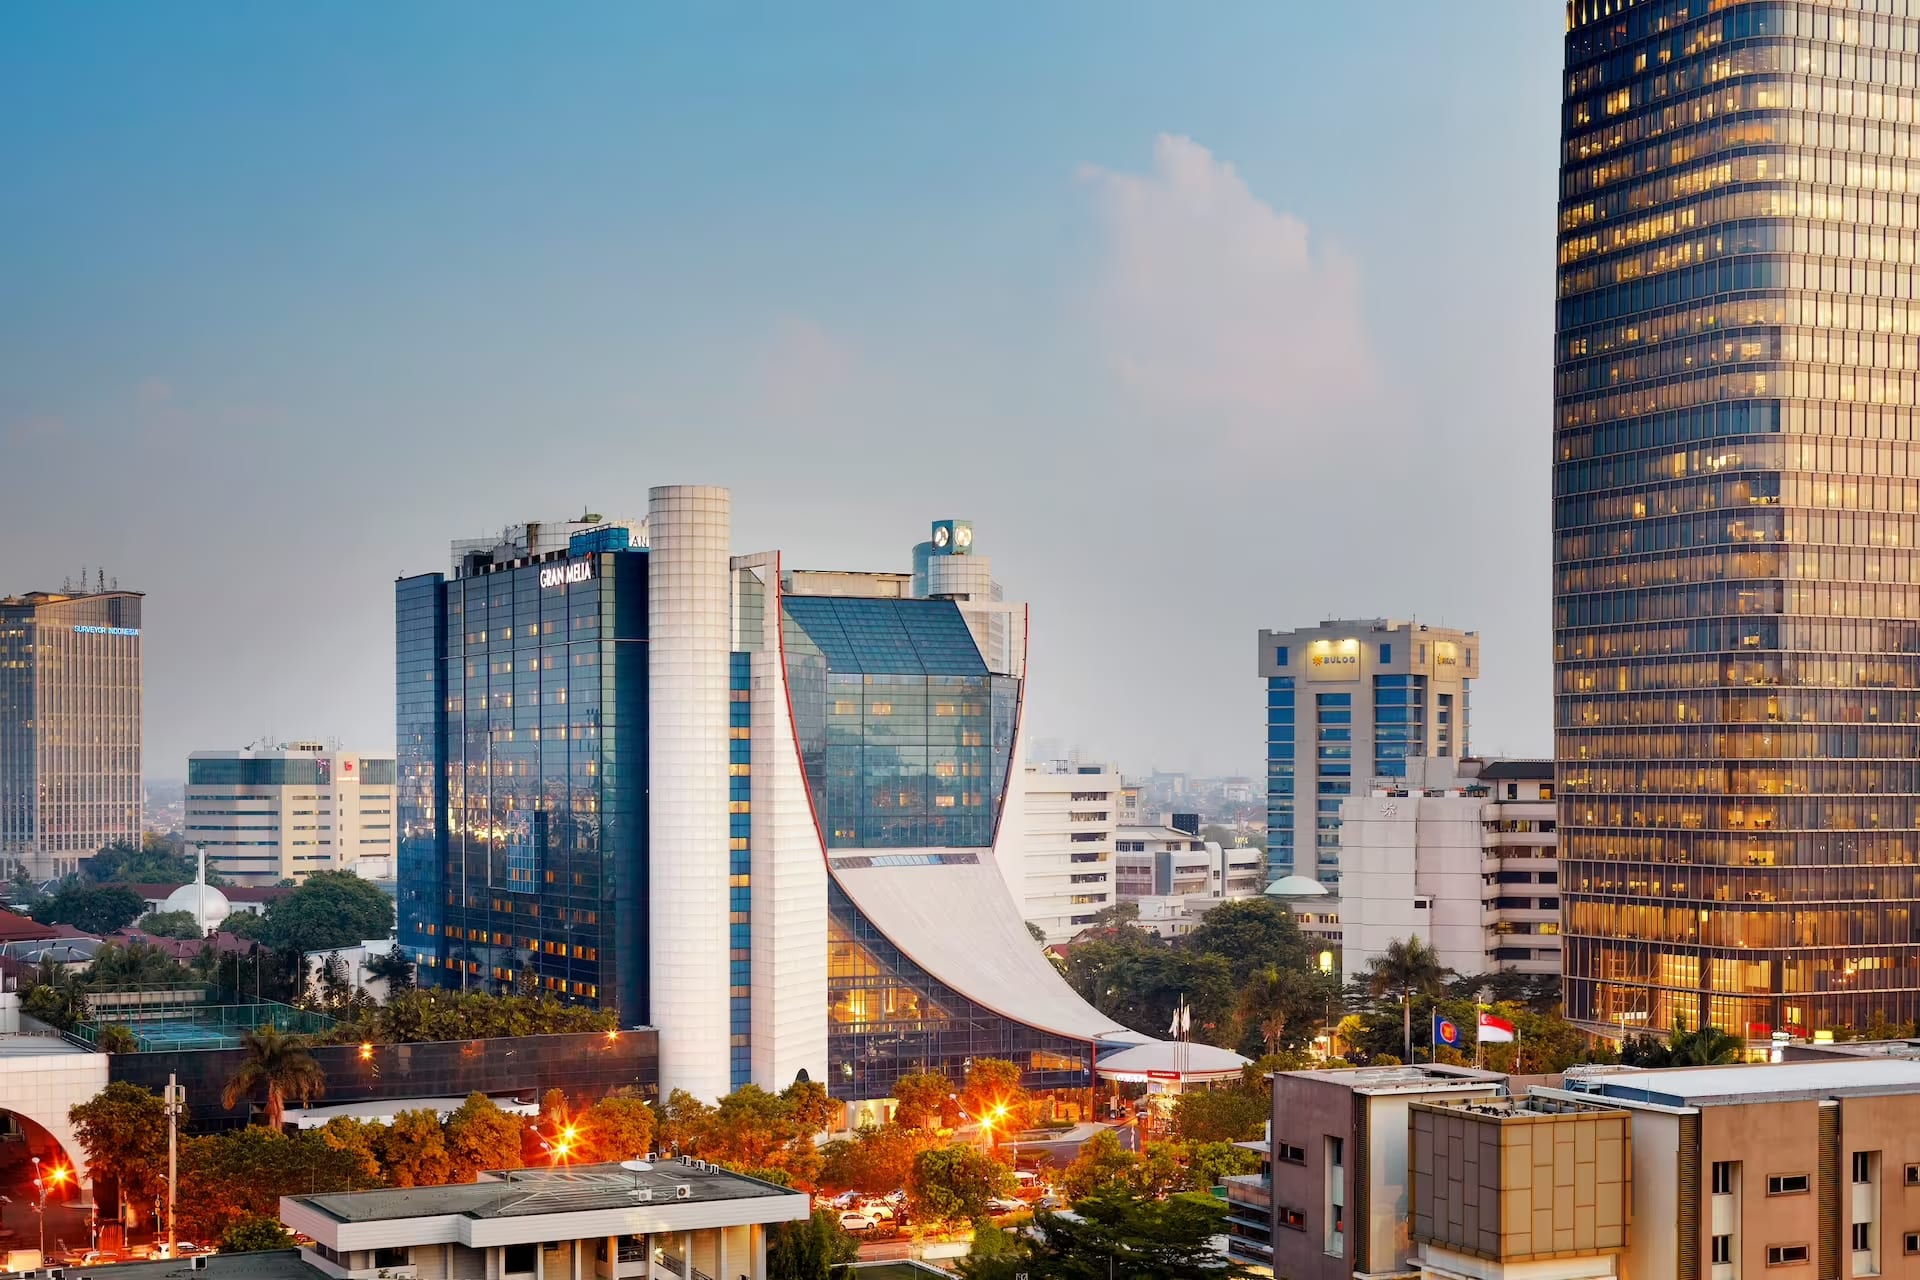 Hotel Gran Melia Jakarta - Menginap Mewah di Ibukota: Review Lengkap Hotel Gran Melia Jakarta - jakartatraveller.com